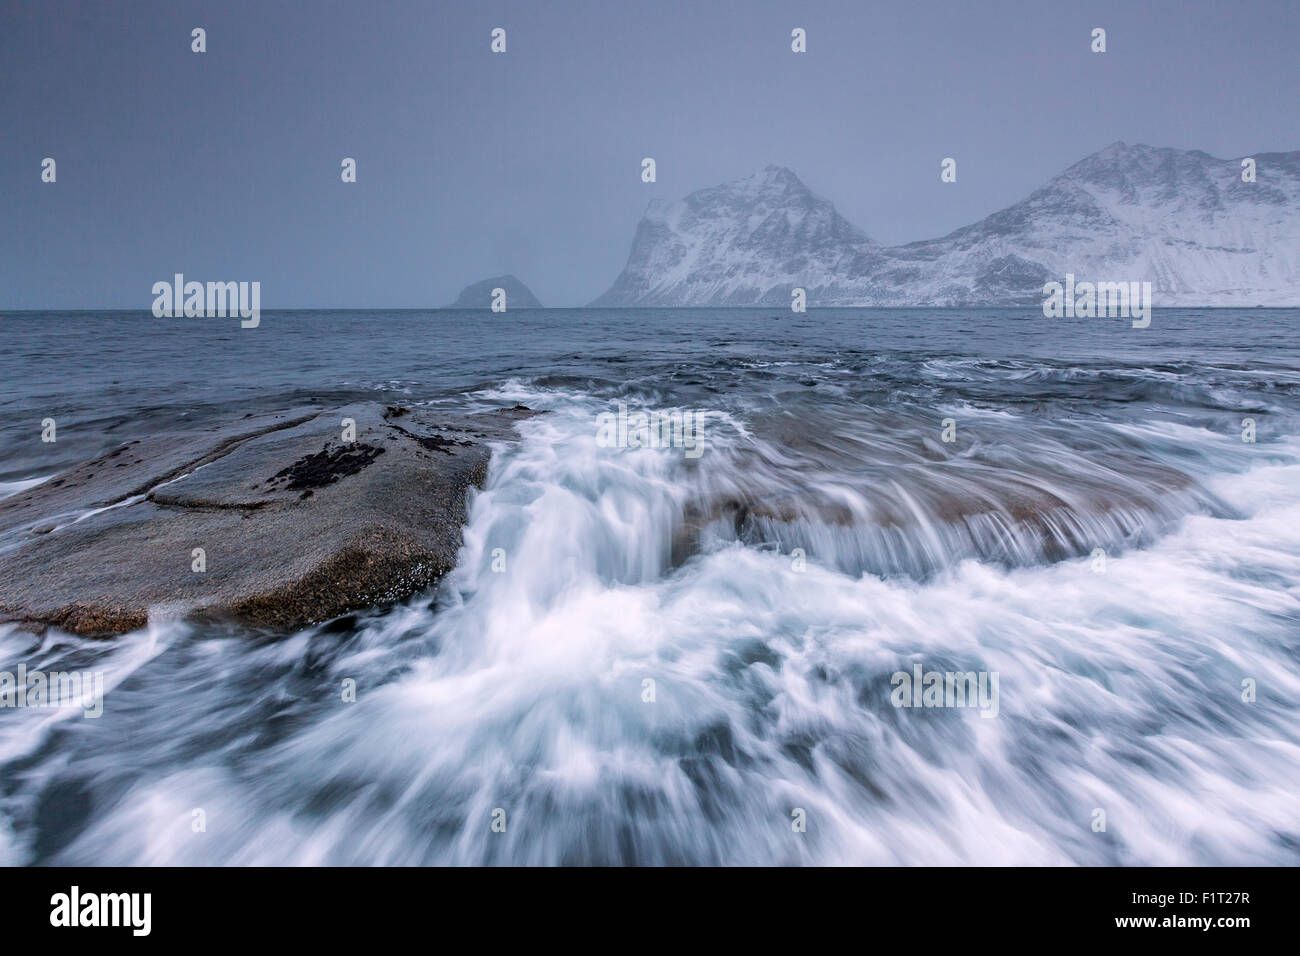 Waves crashing on the rocks of the cold sea, Haukland, Lofoten Islands, Northern Norway, Scandinavia, Arctic, Europe Stock Photo